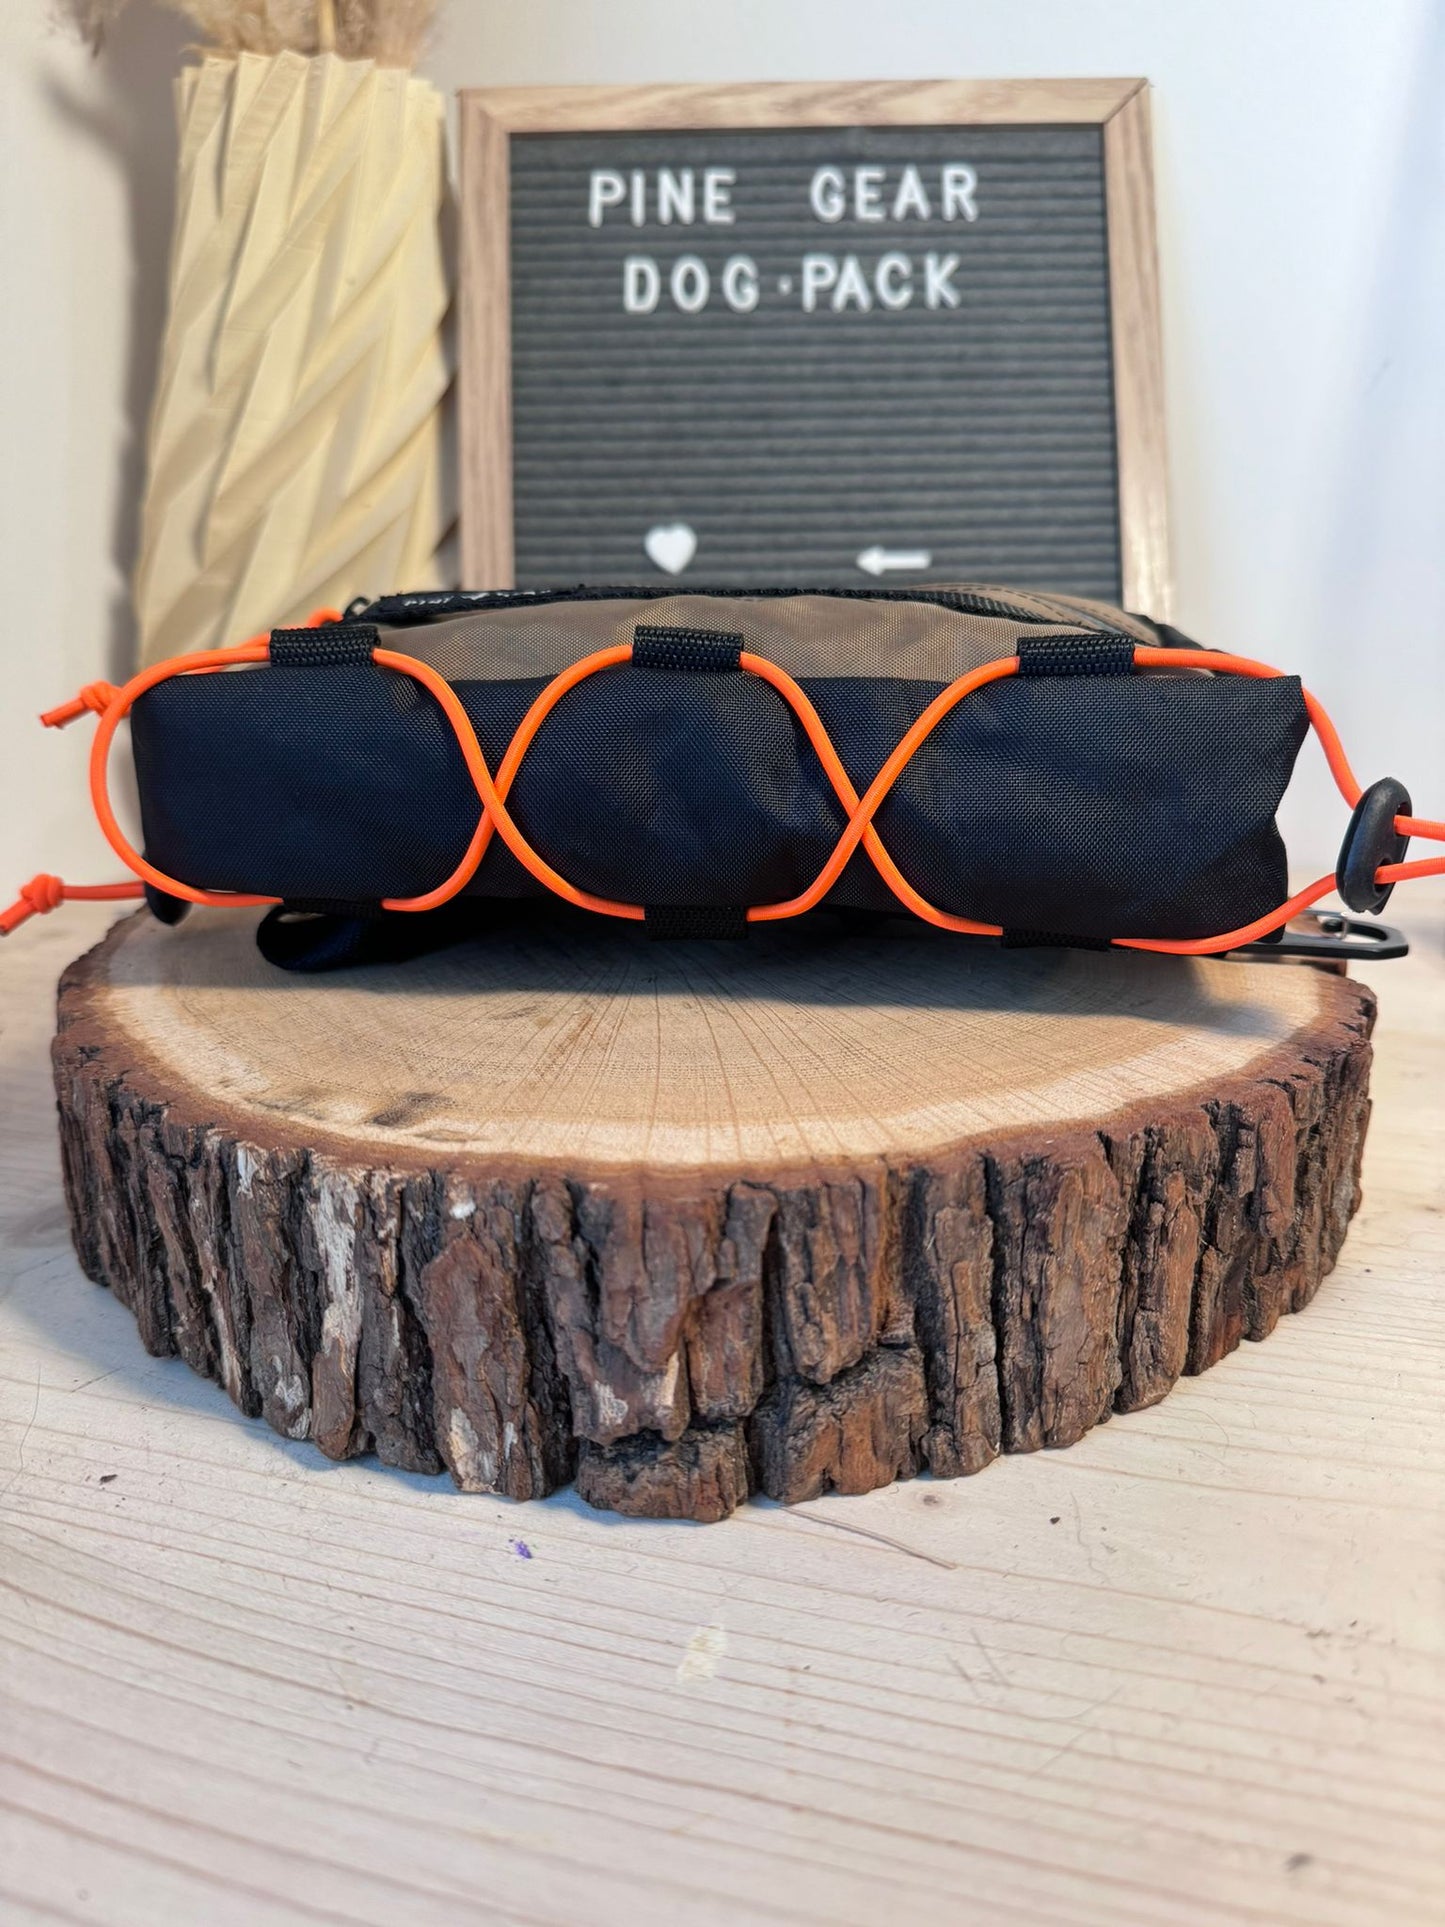 PINE GEAR - Dogpack brown/black/orange